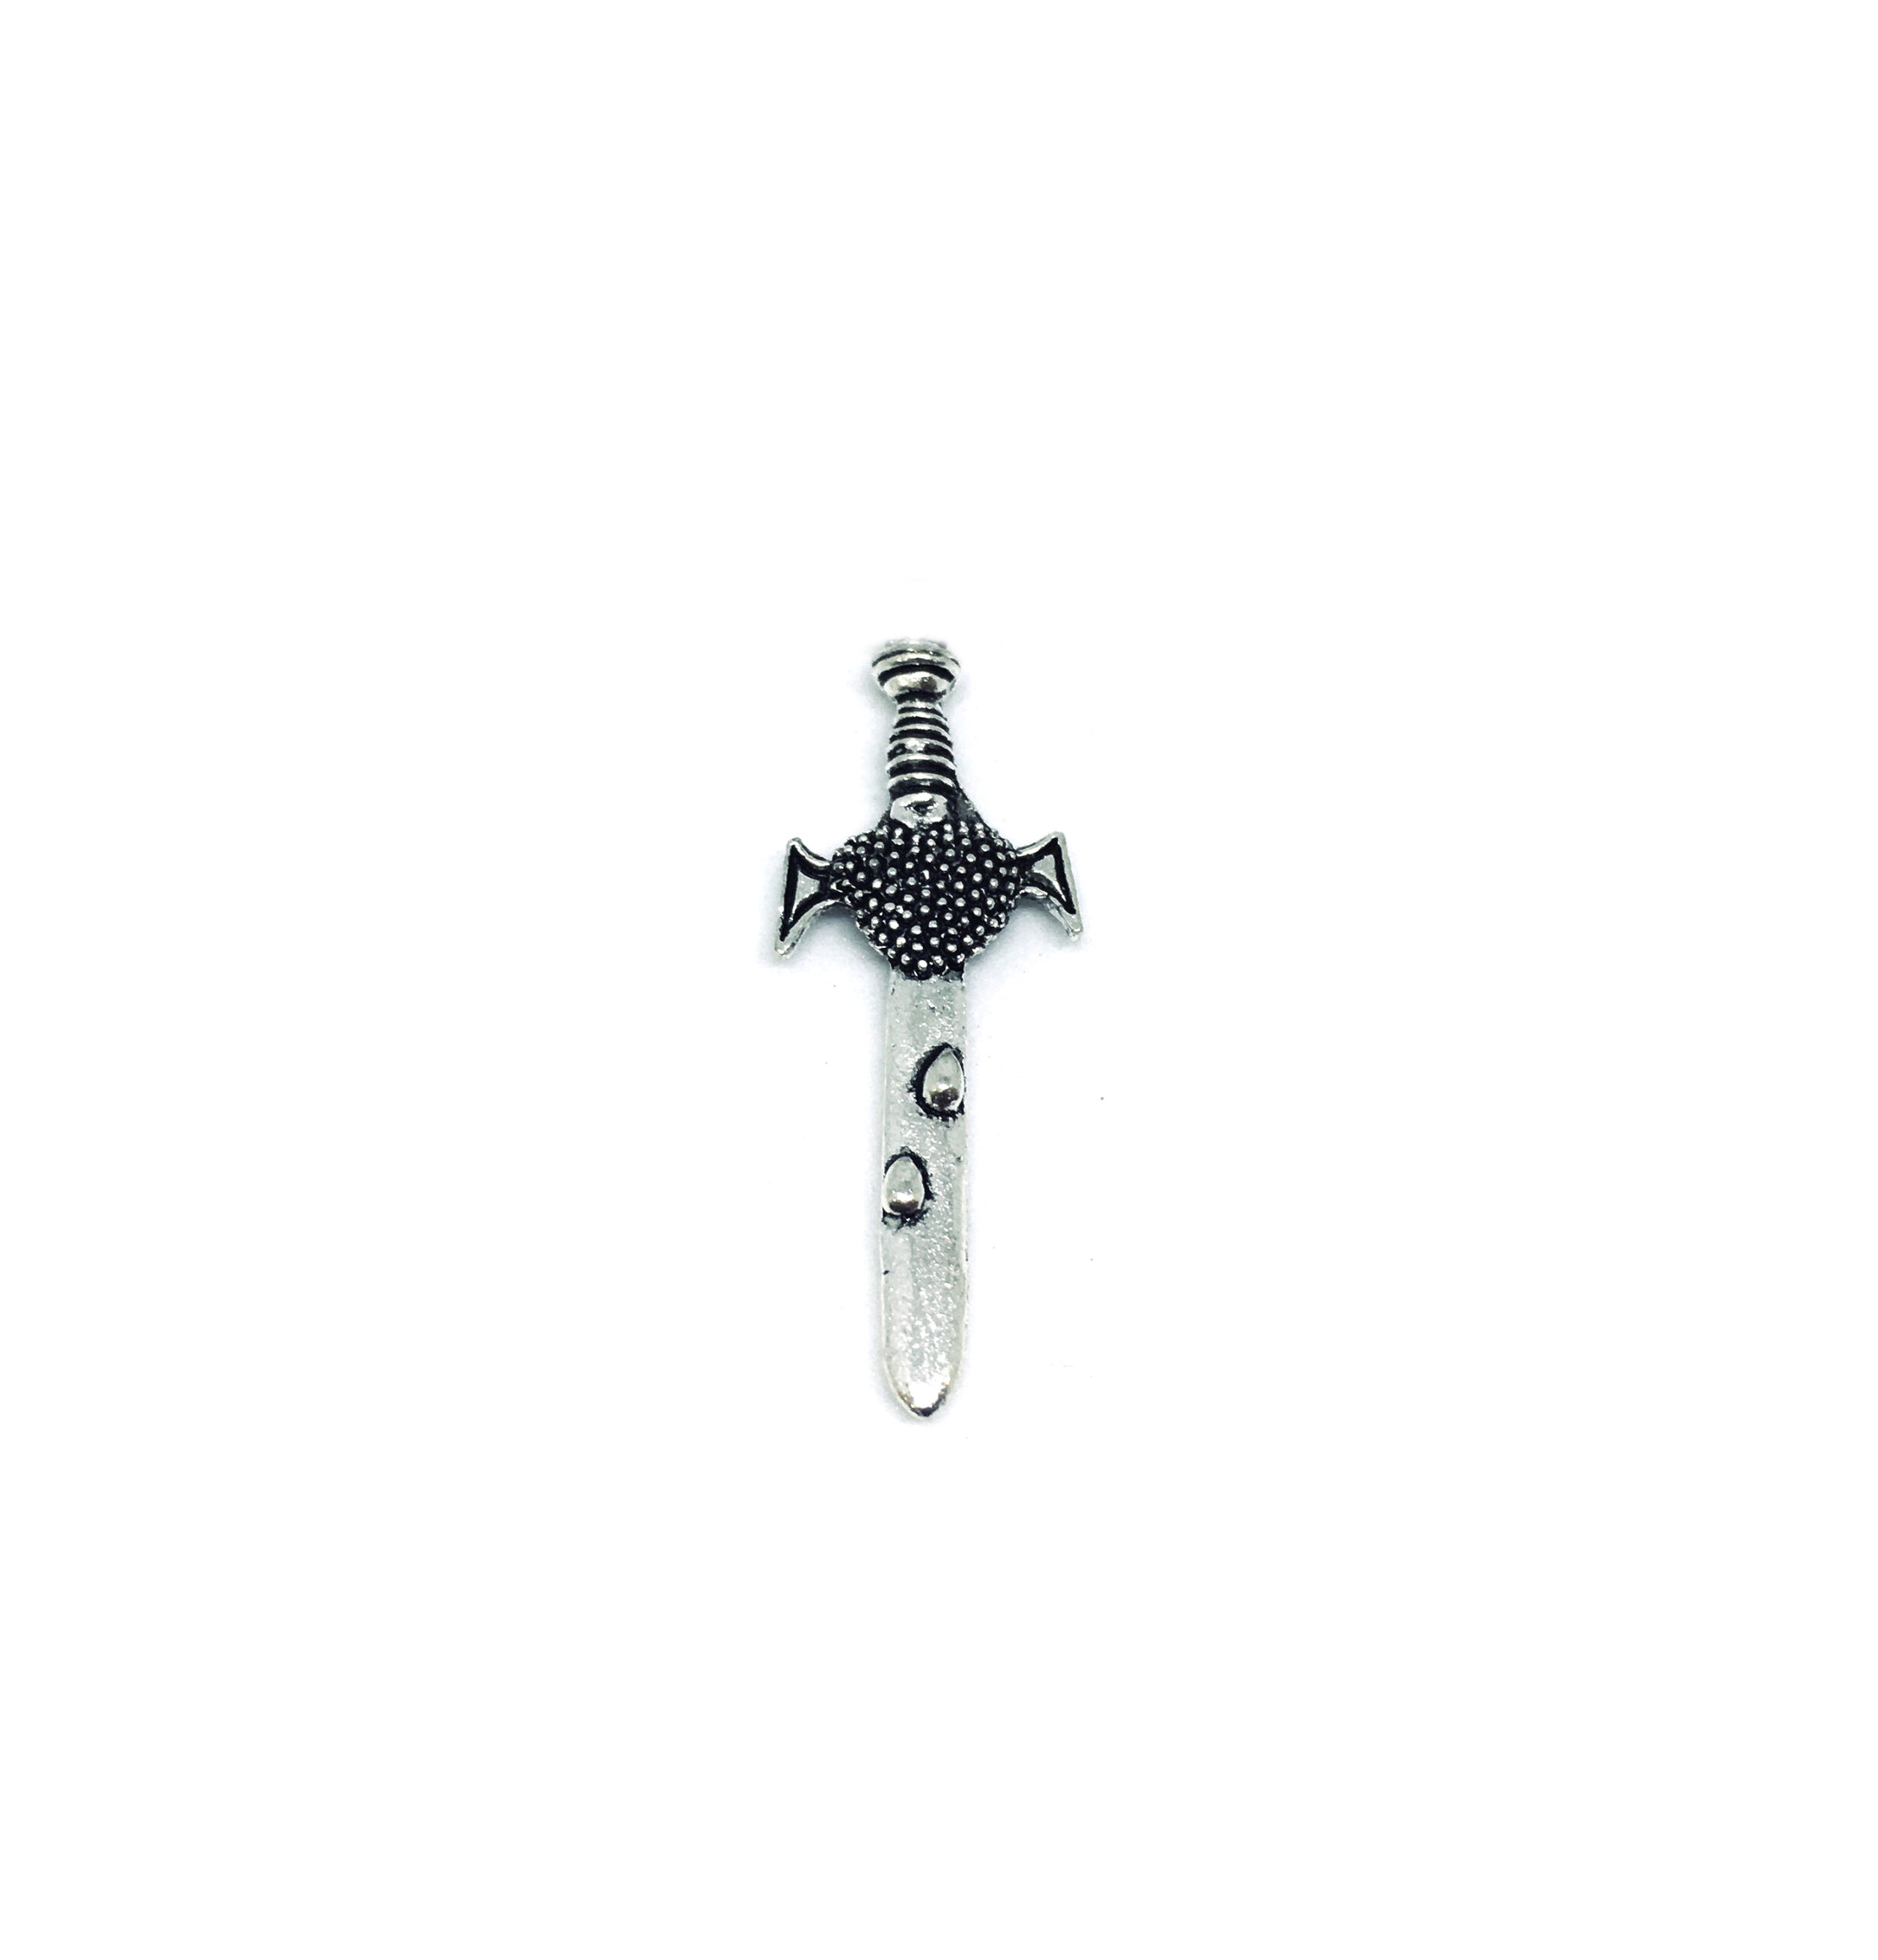 FPEW-194 Pewter Sword Lapel Pin